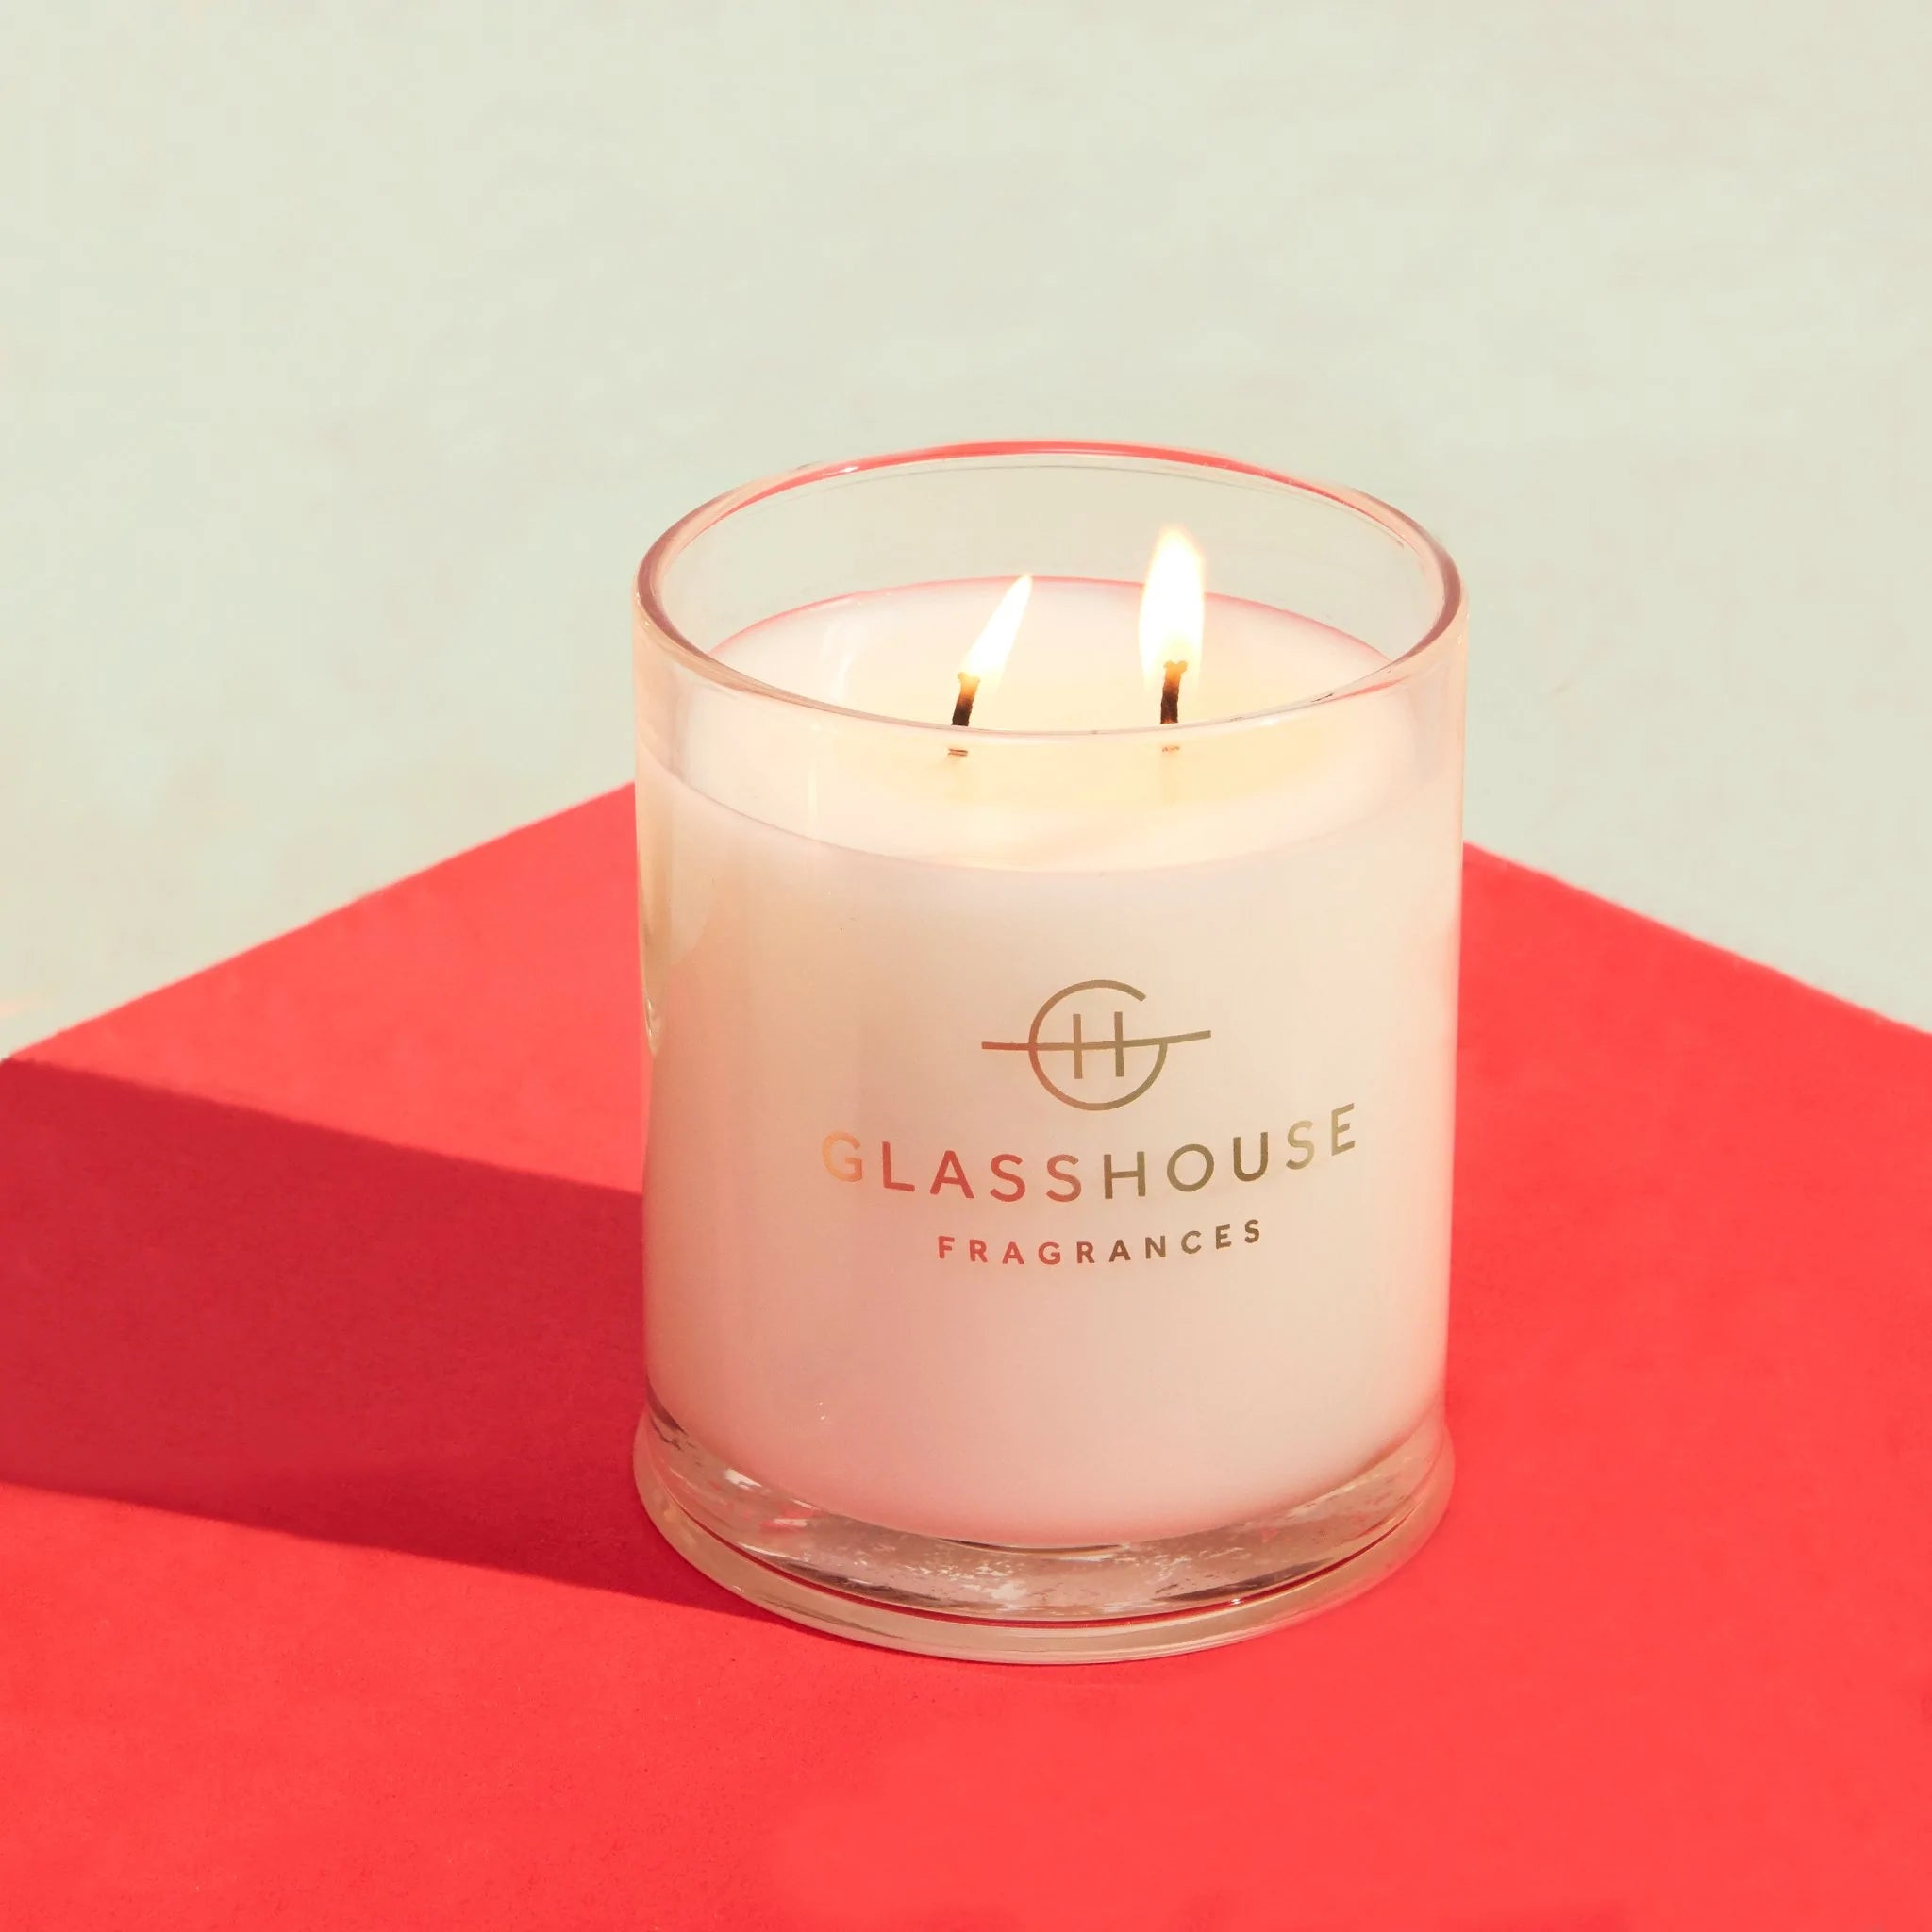 Glasshouse Fragrances 13.4oz Candle - THE HAMPTONS